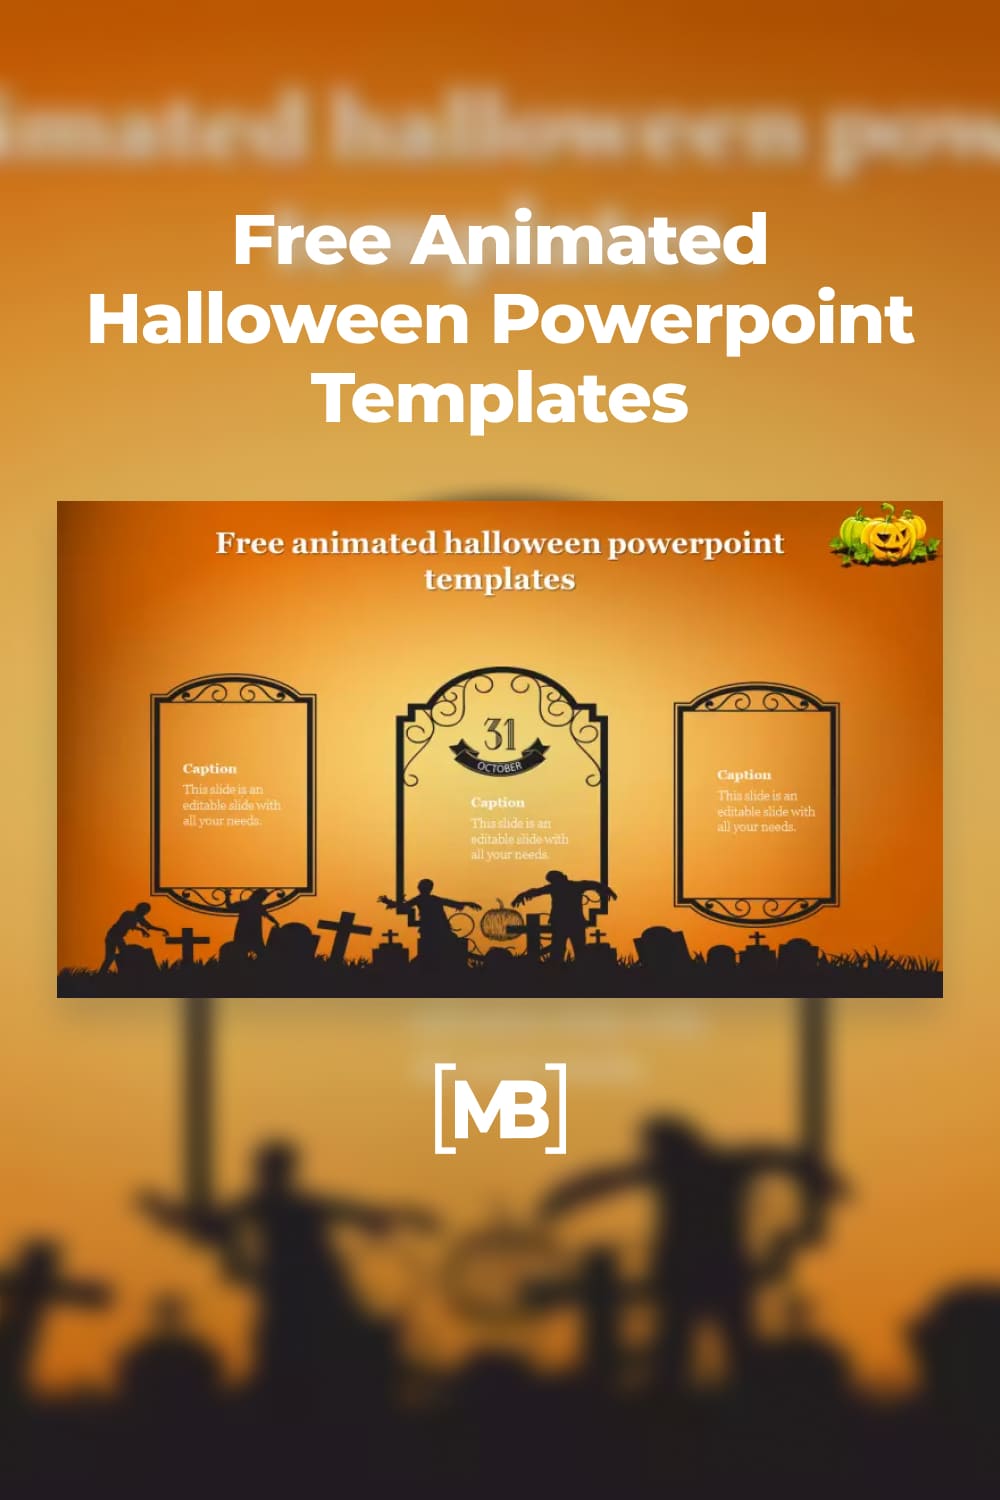 Free animated Halloween powerpoint templates.